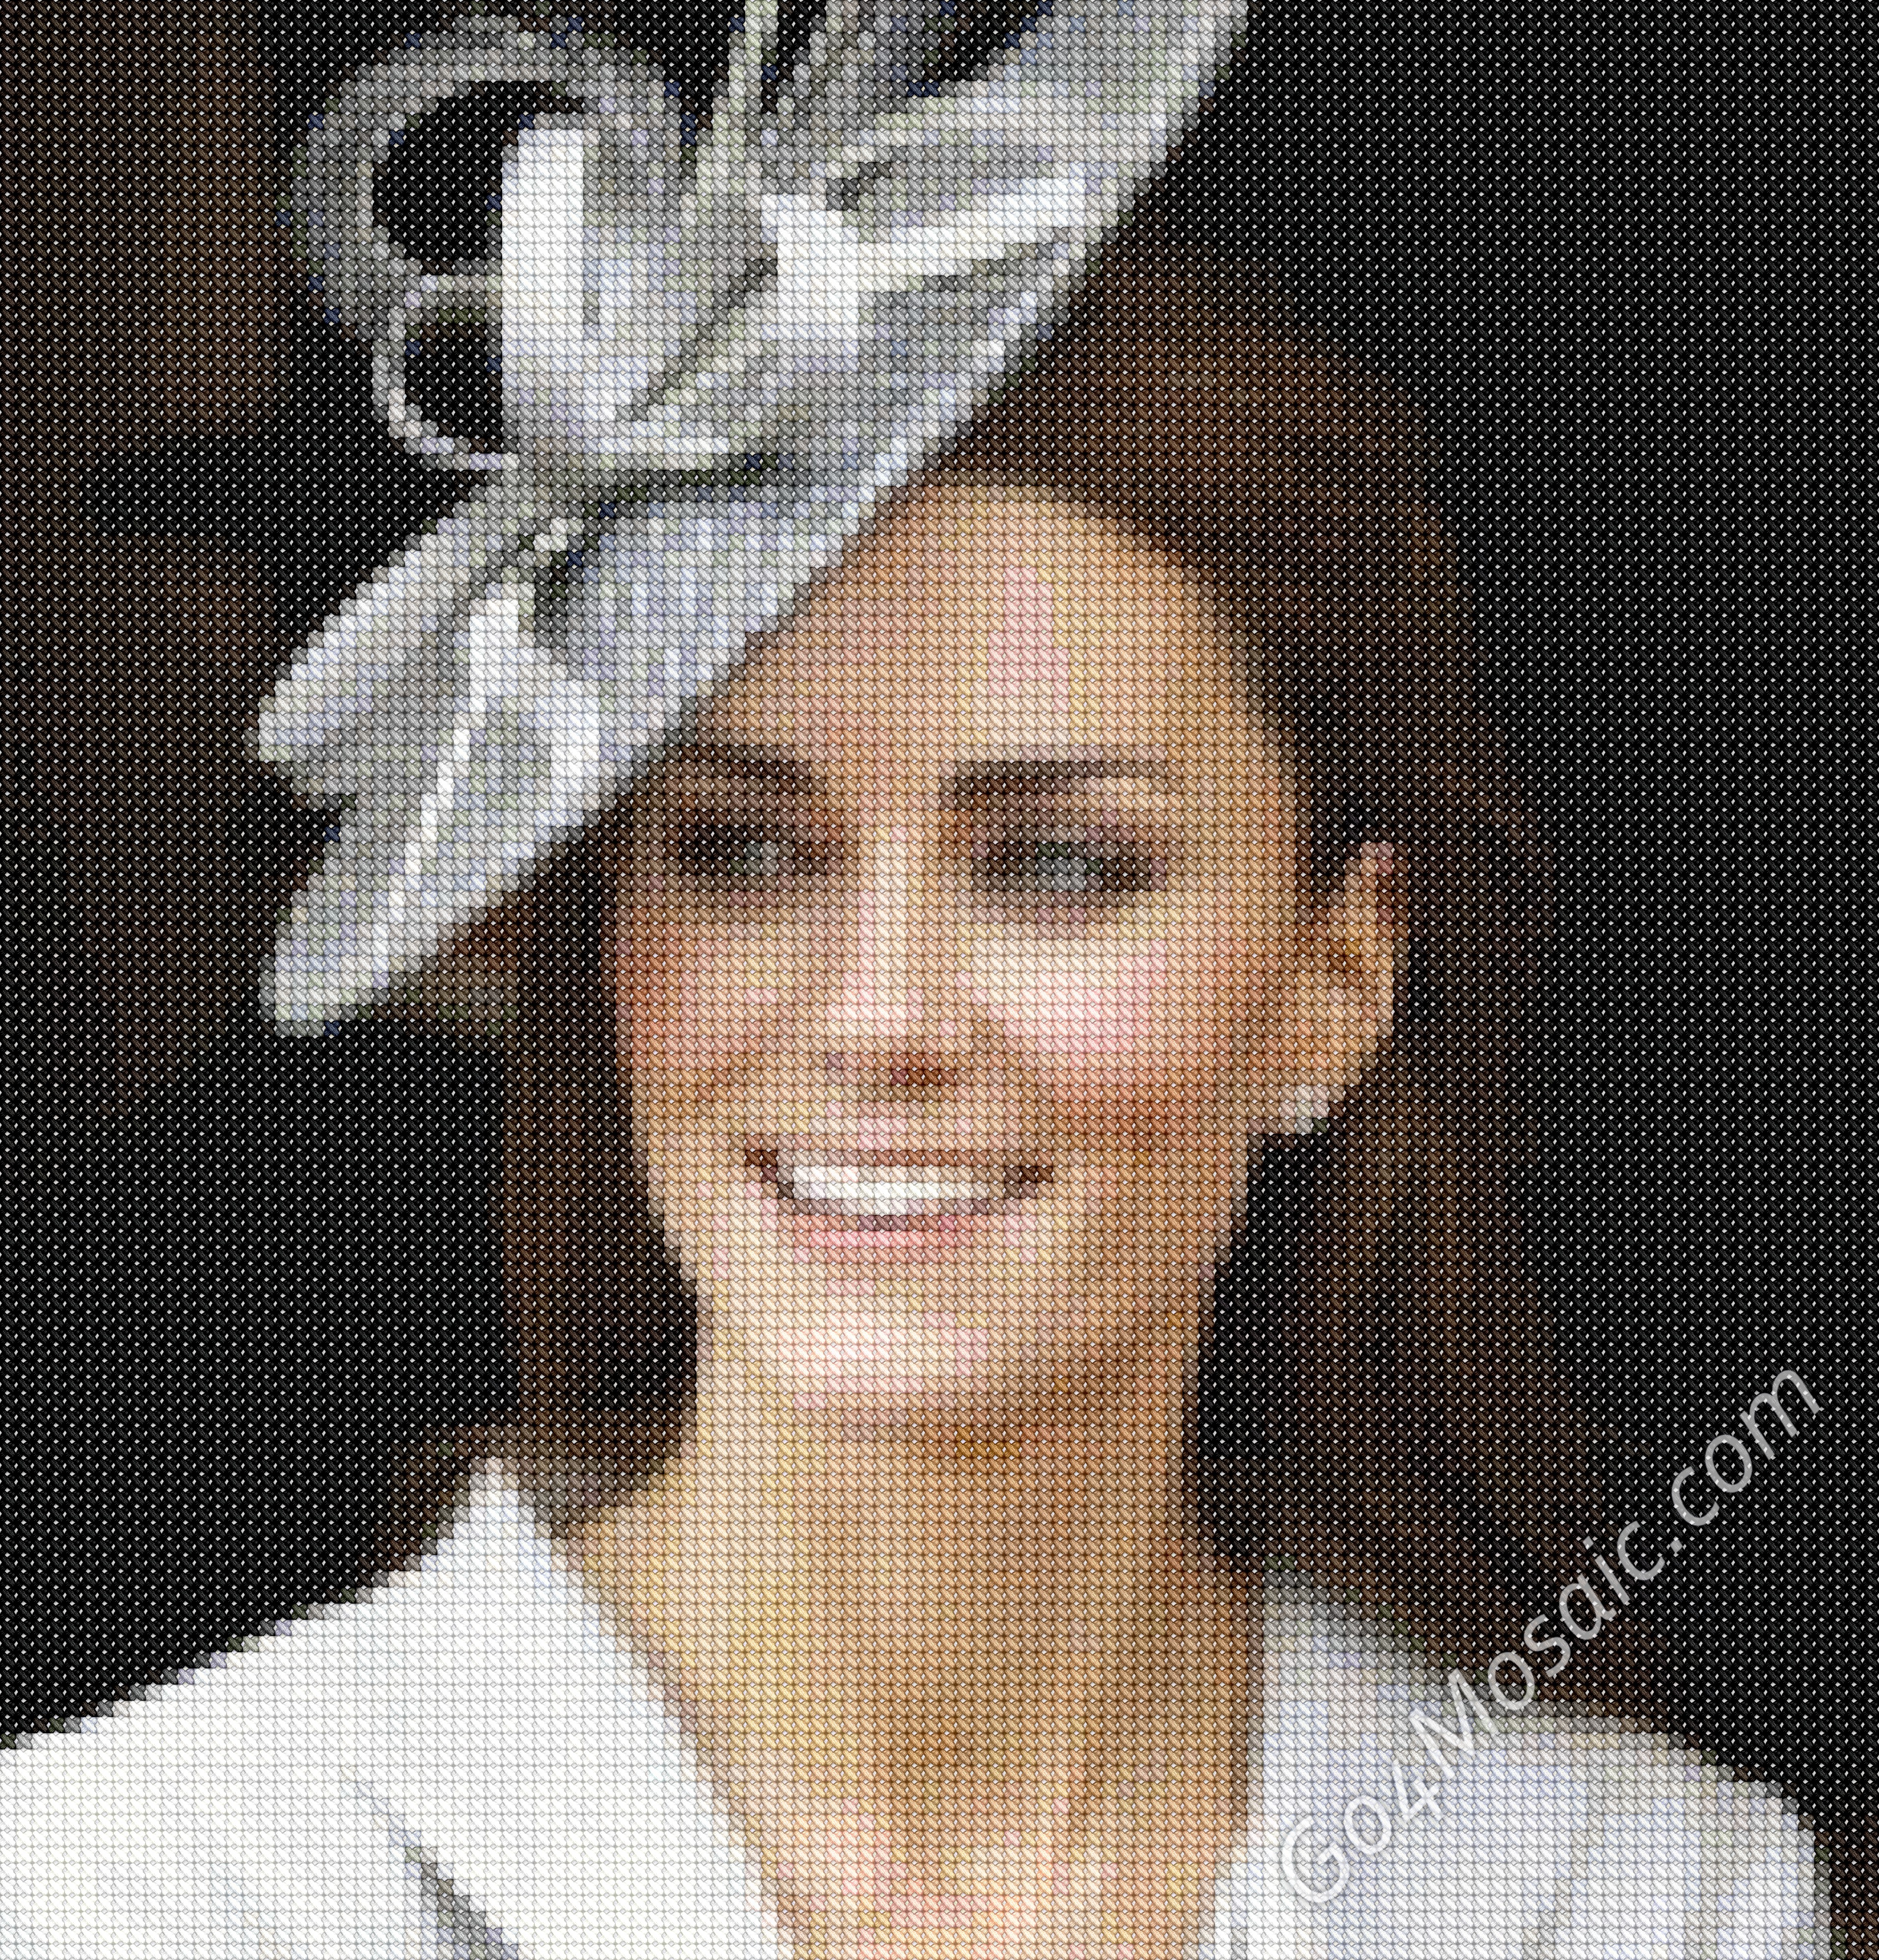 Cross-stitched Kate Middleton mosaic